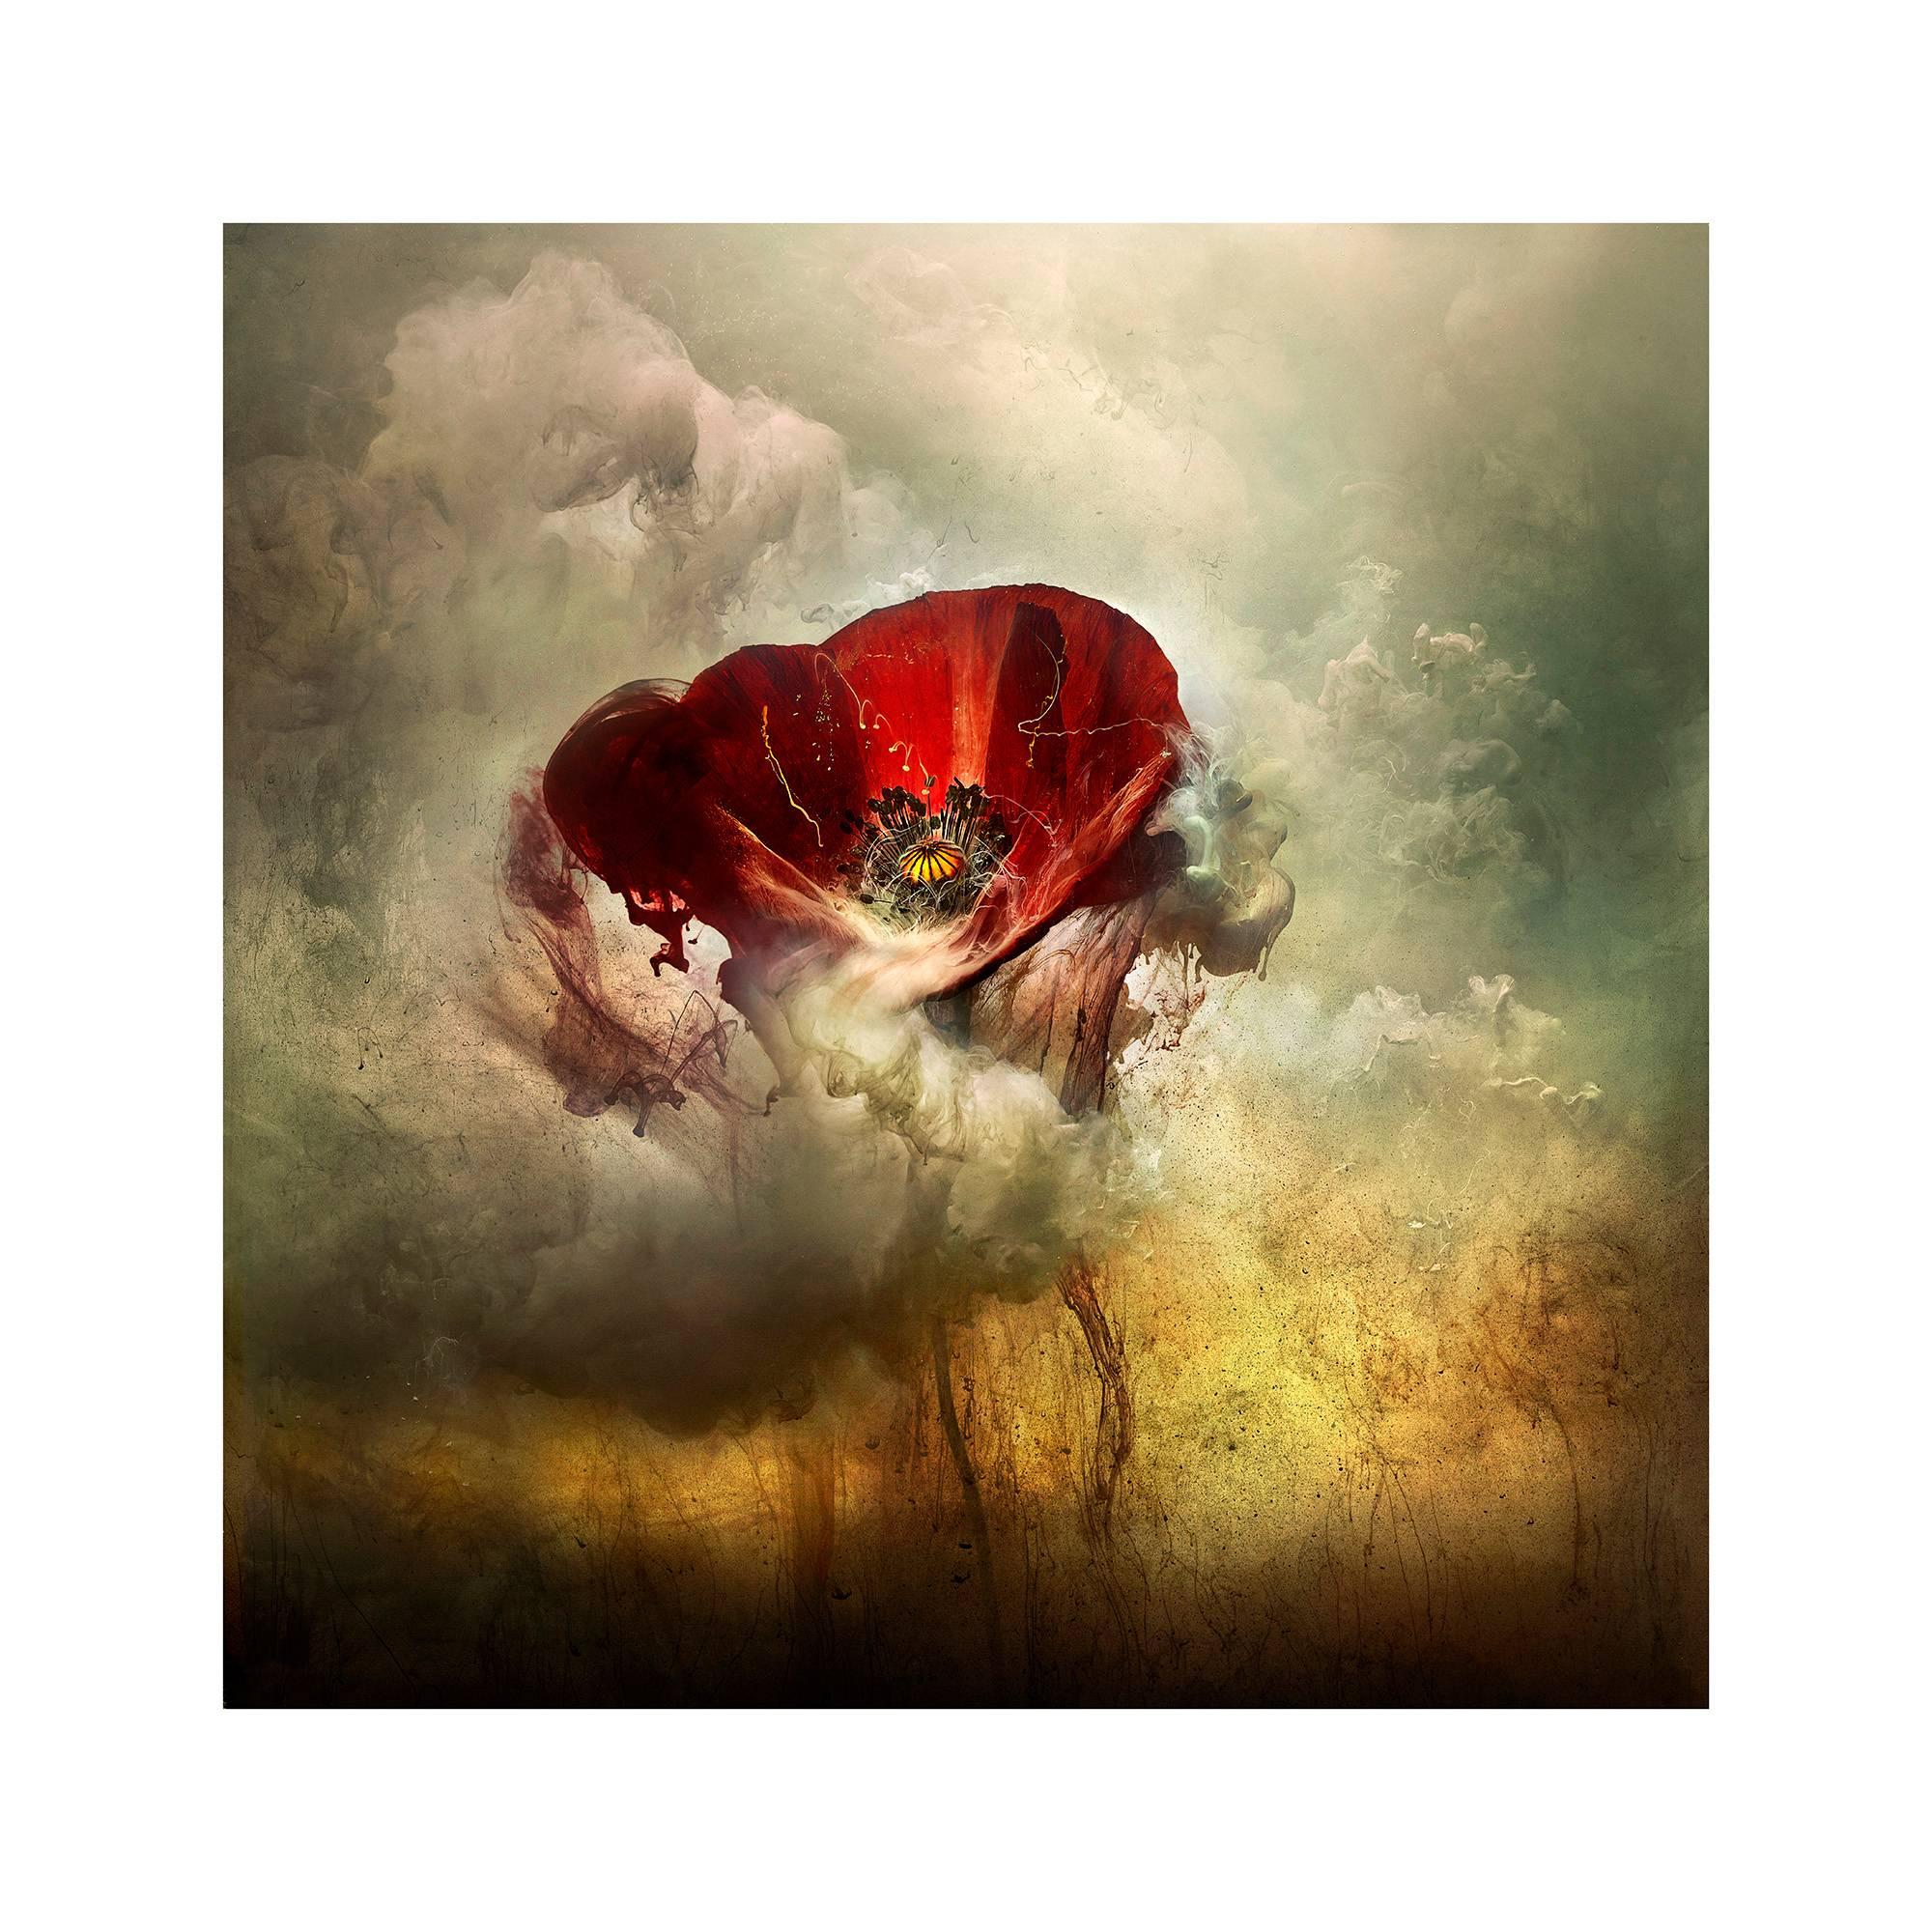 Giles Revell Color Photograph - "War Poppy 3, " 2015 Contemporary Photograph